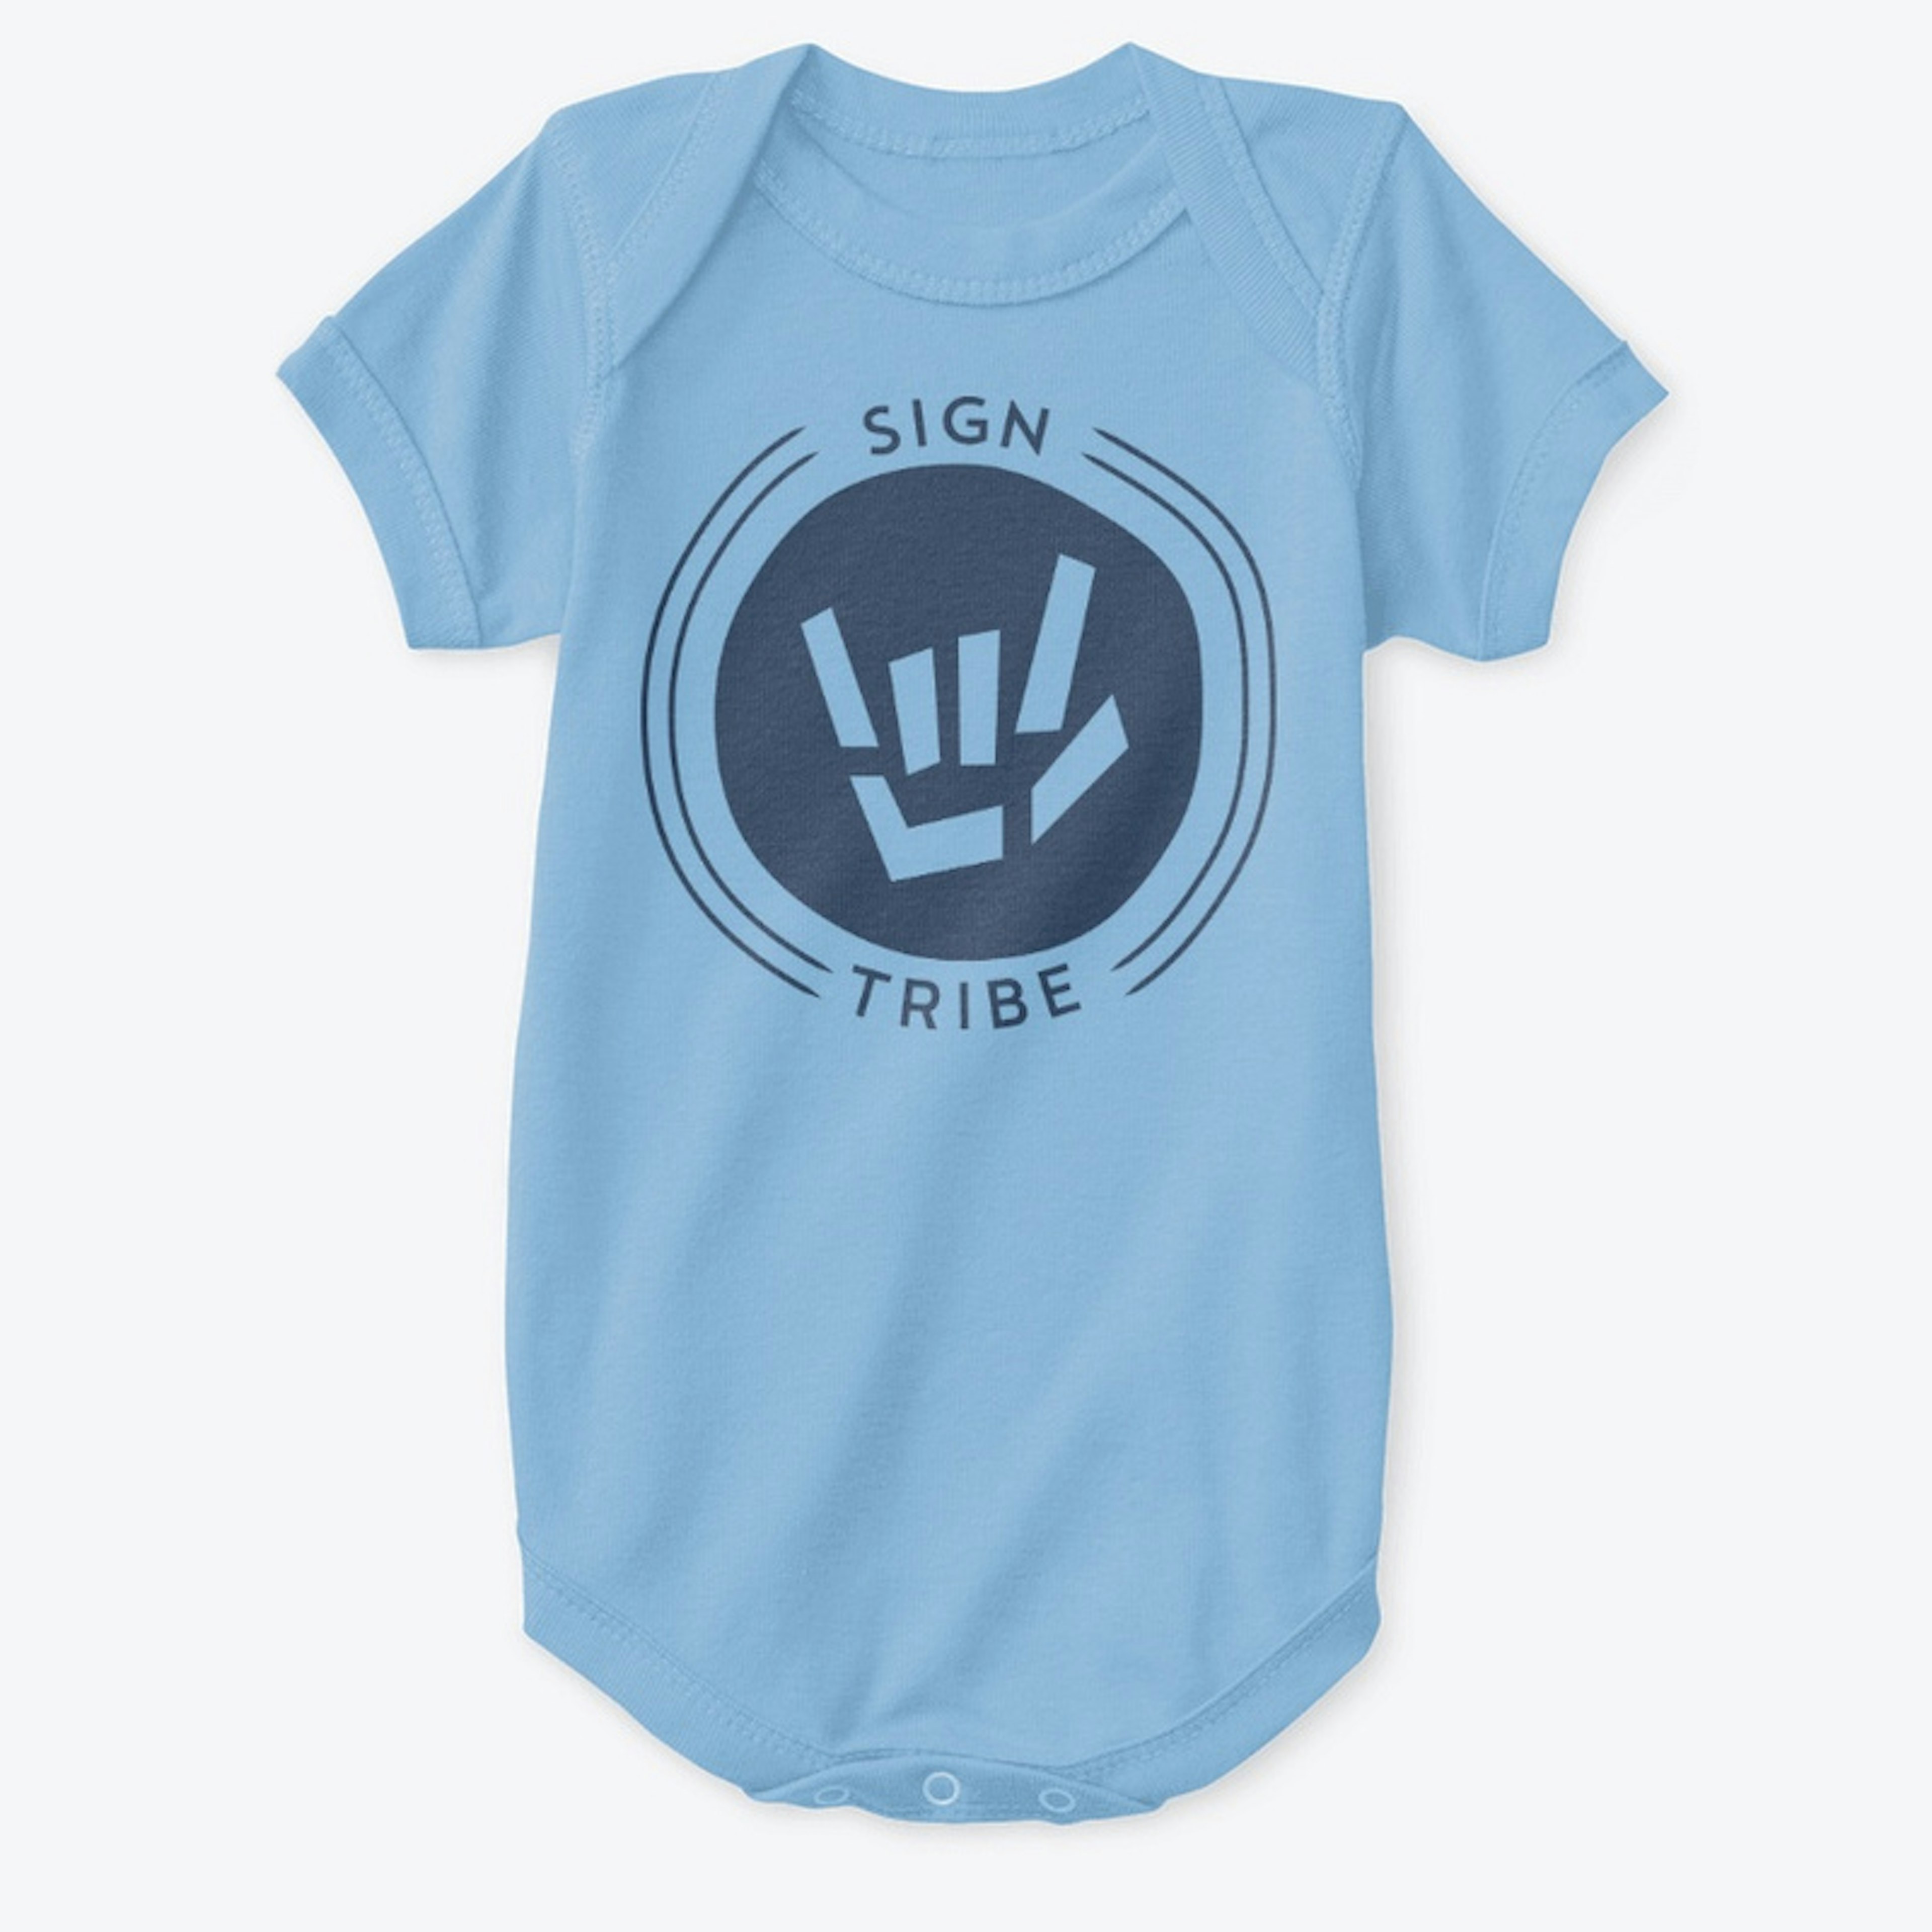 Sign Tribe Baby Premium Onesie